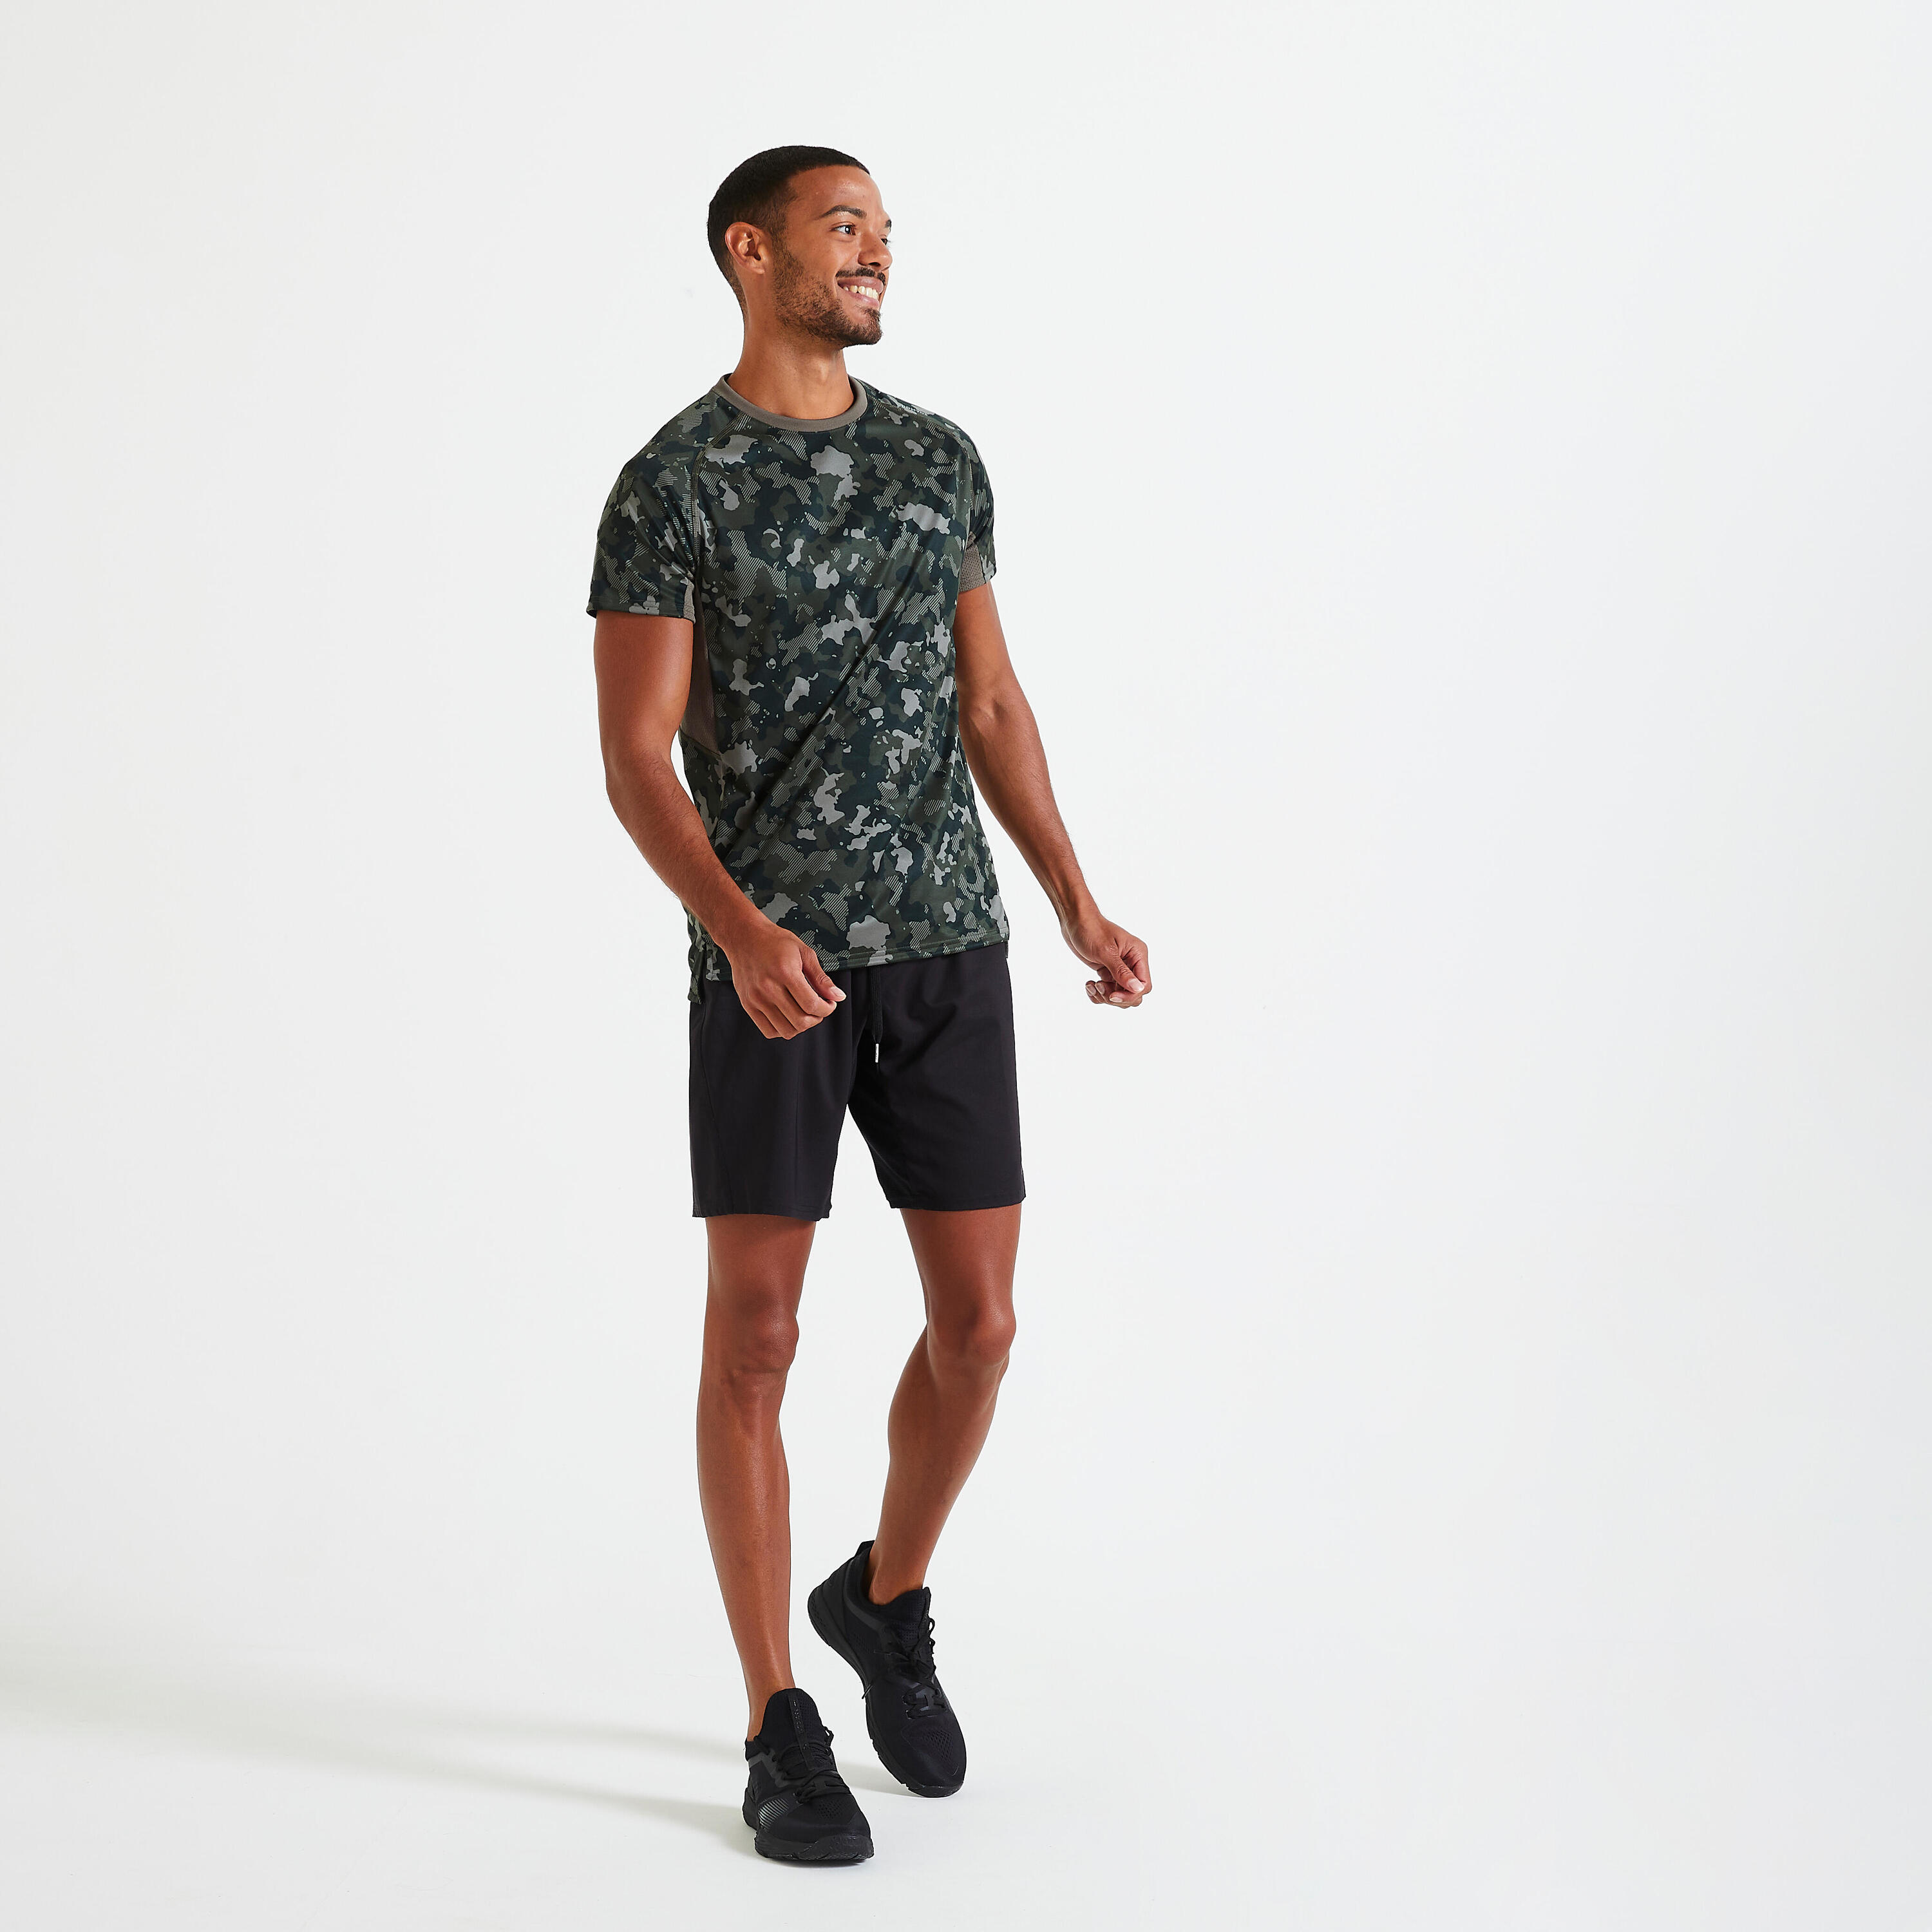 Technical Fitness T-Shirt - Grey Print/Camouflage/Khaki 2/6